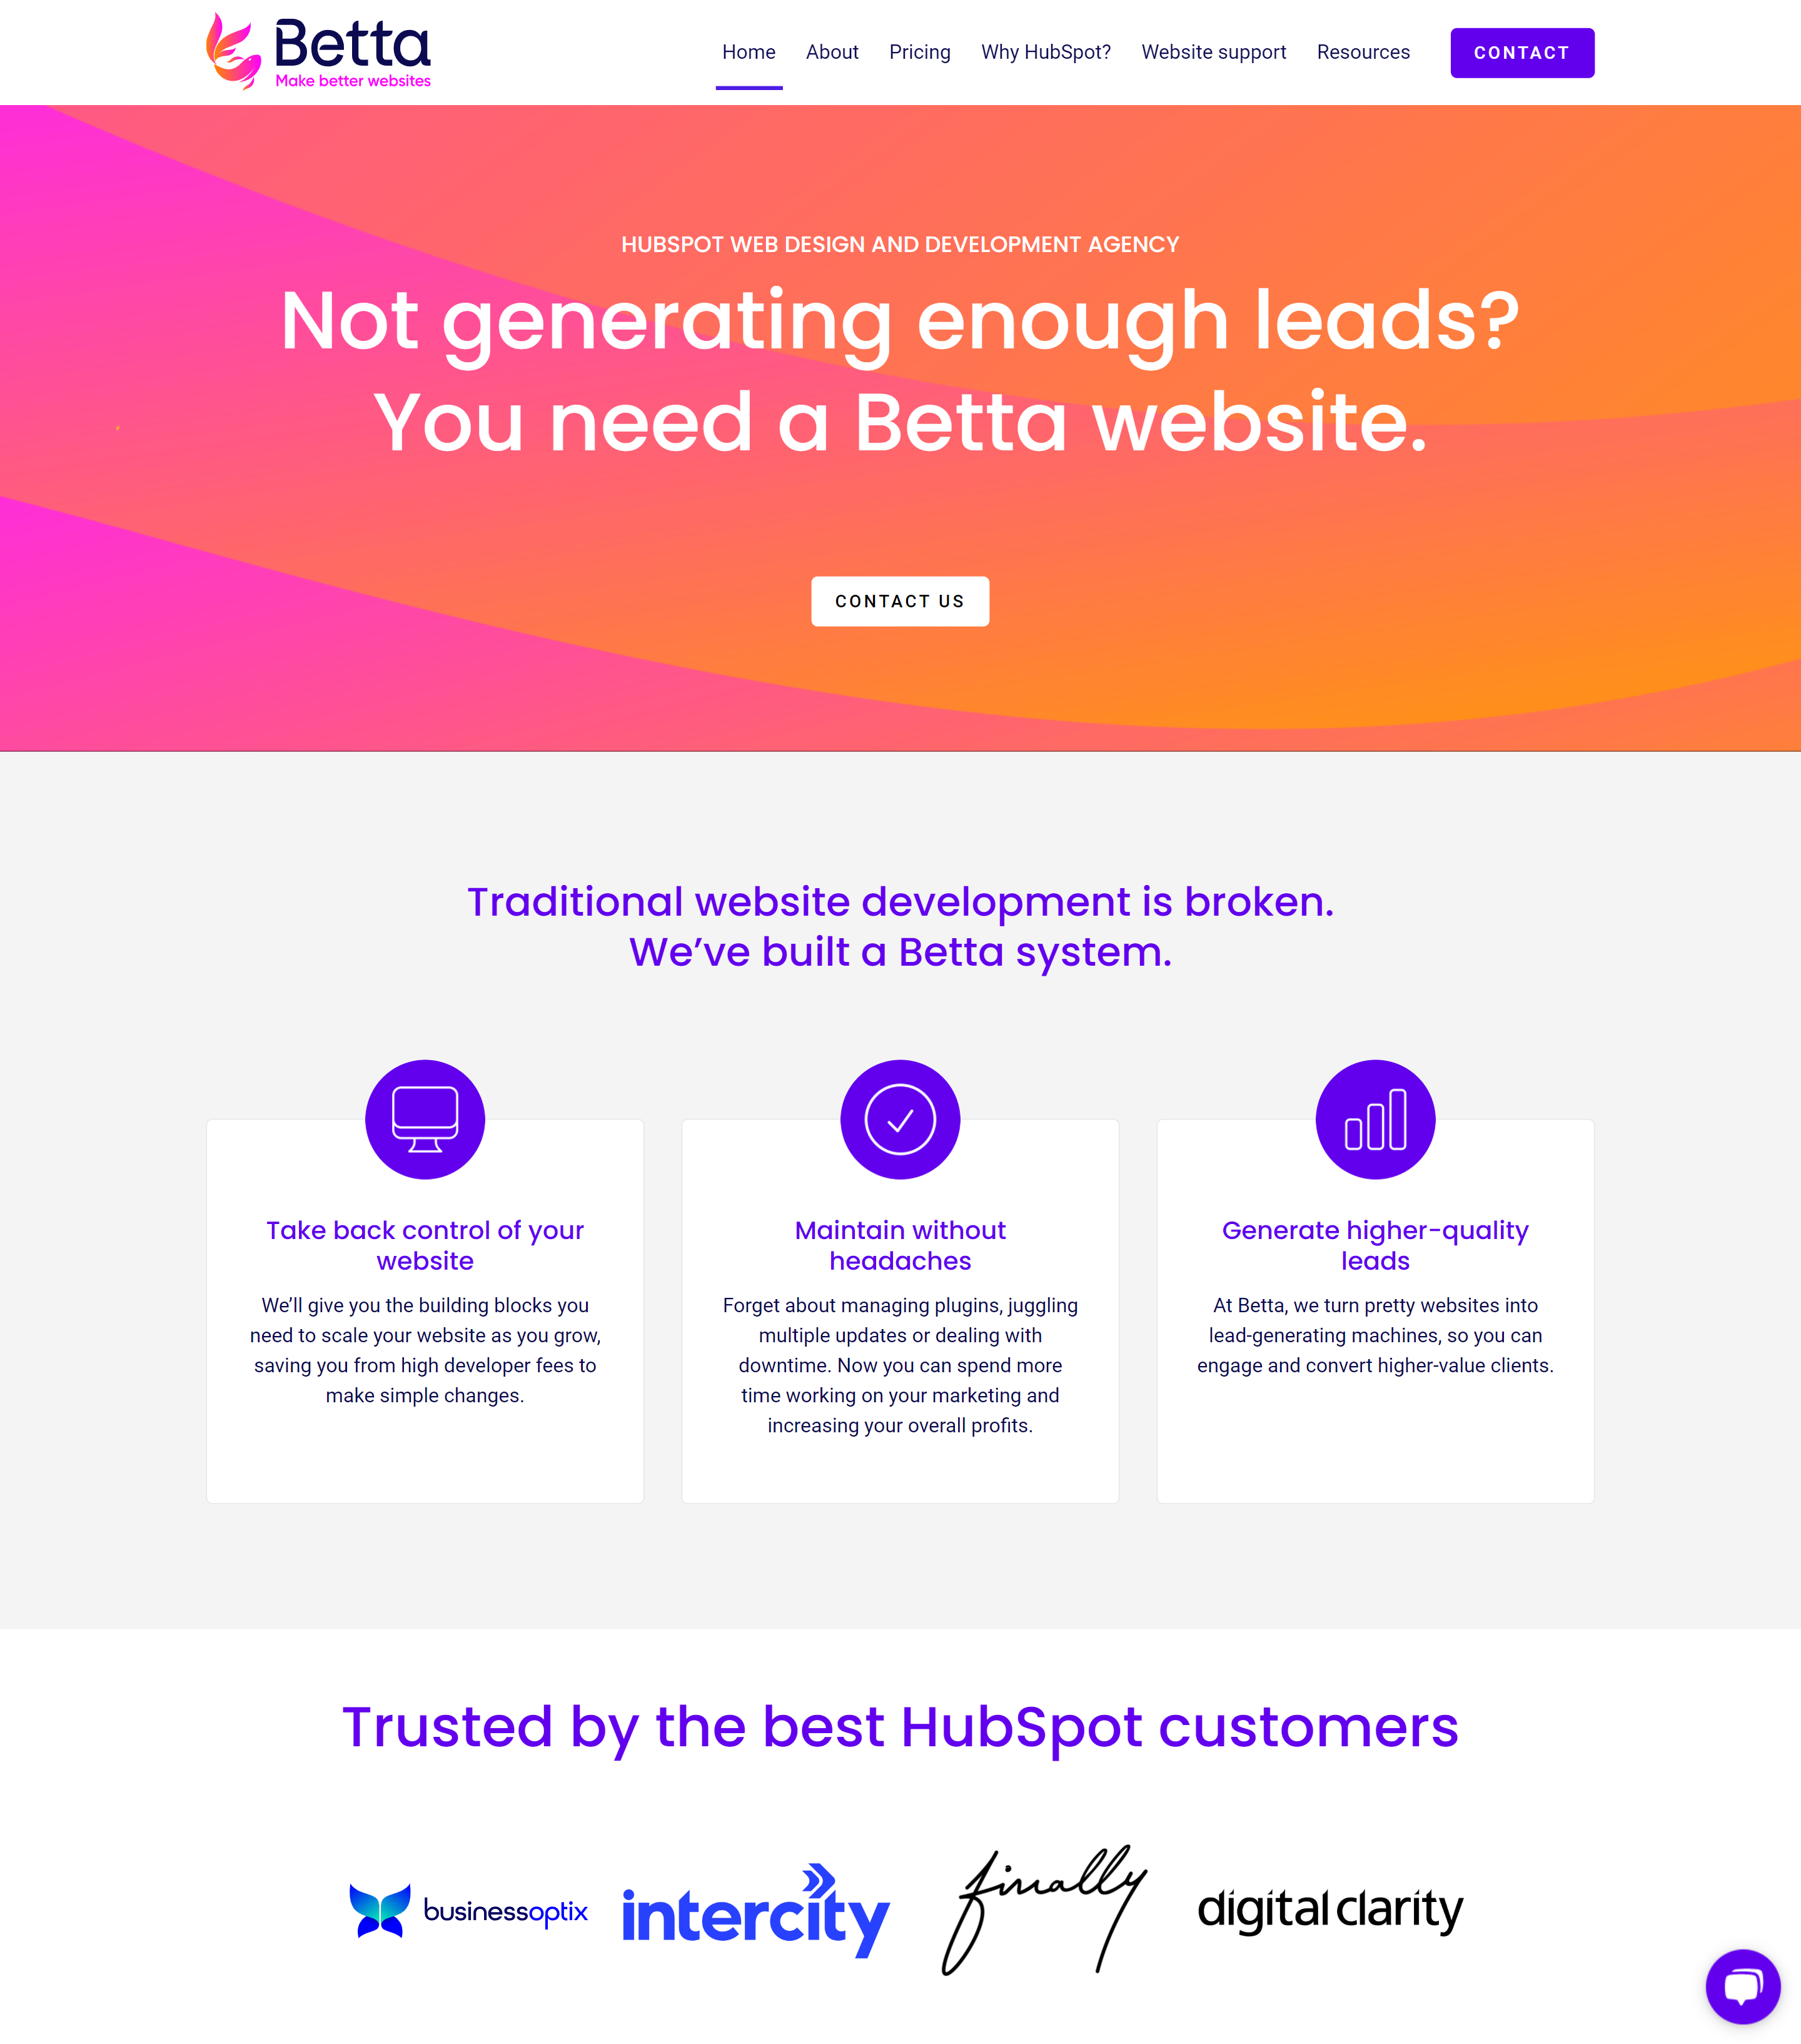 Betta website image